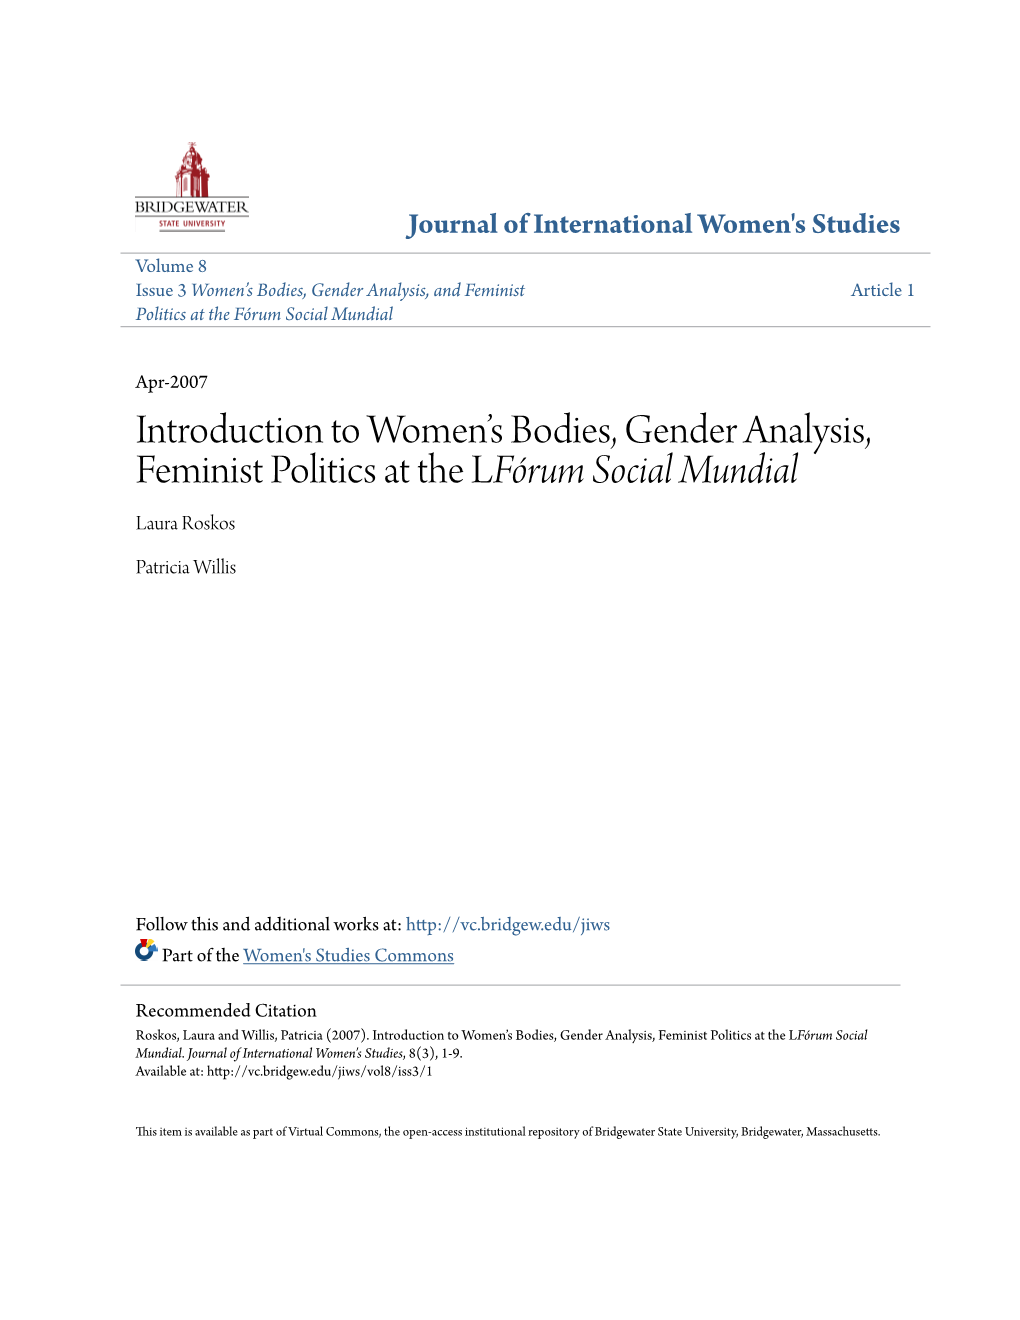 Introduction to Women's Bodies, Gender Analysis, Feminist Politics